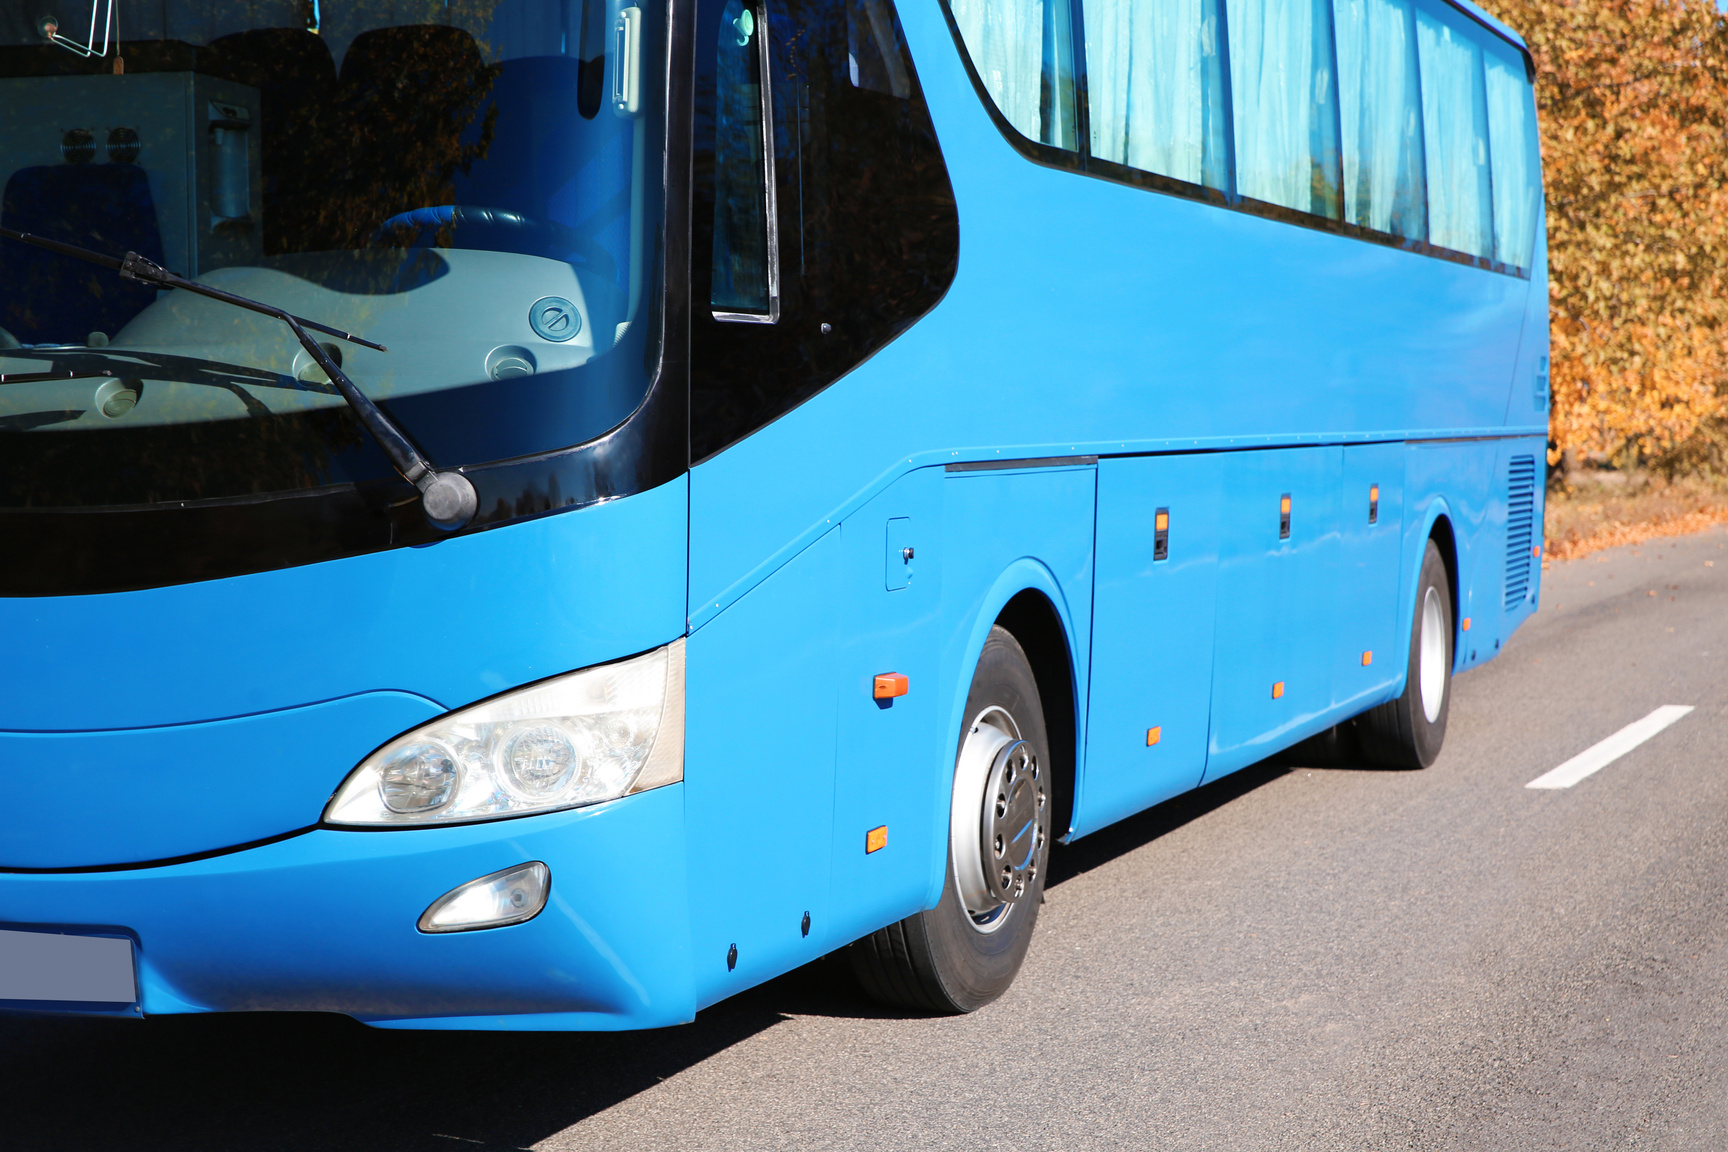 Modern Blue Bus on Road. Passenger Transportation